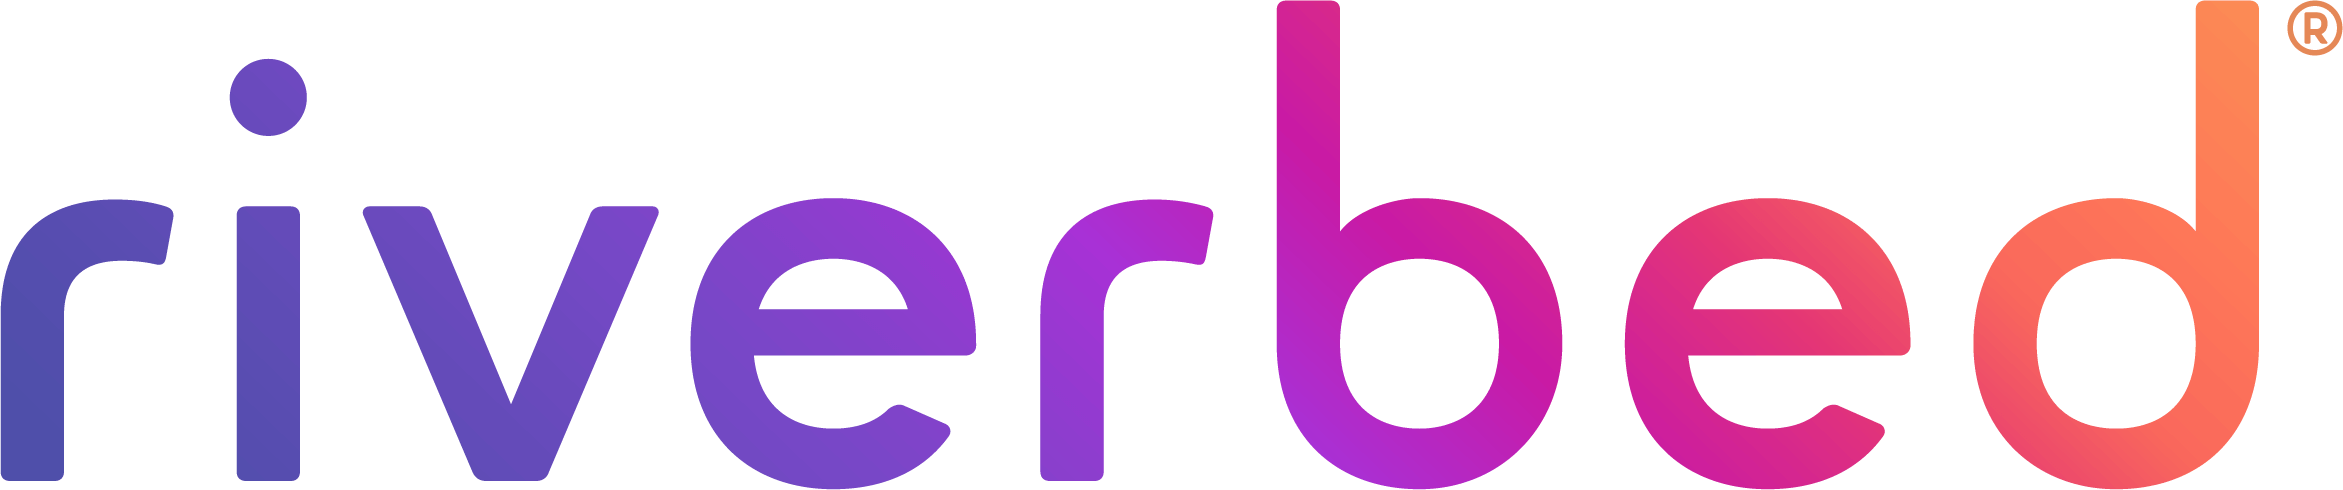 riverbed logo in purple pink words